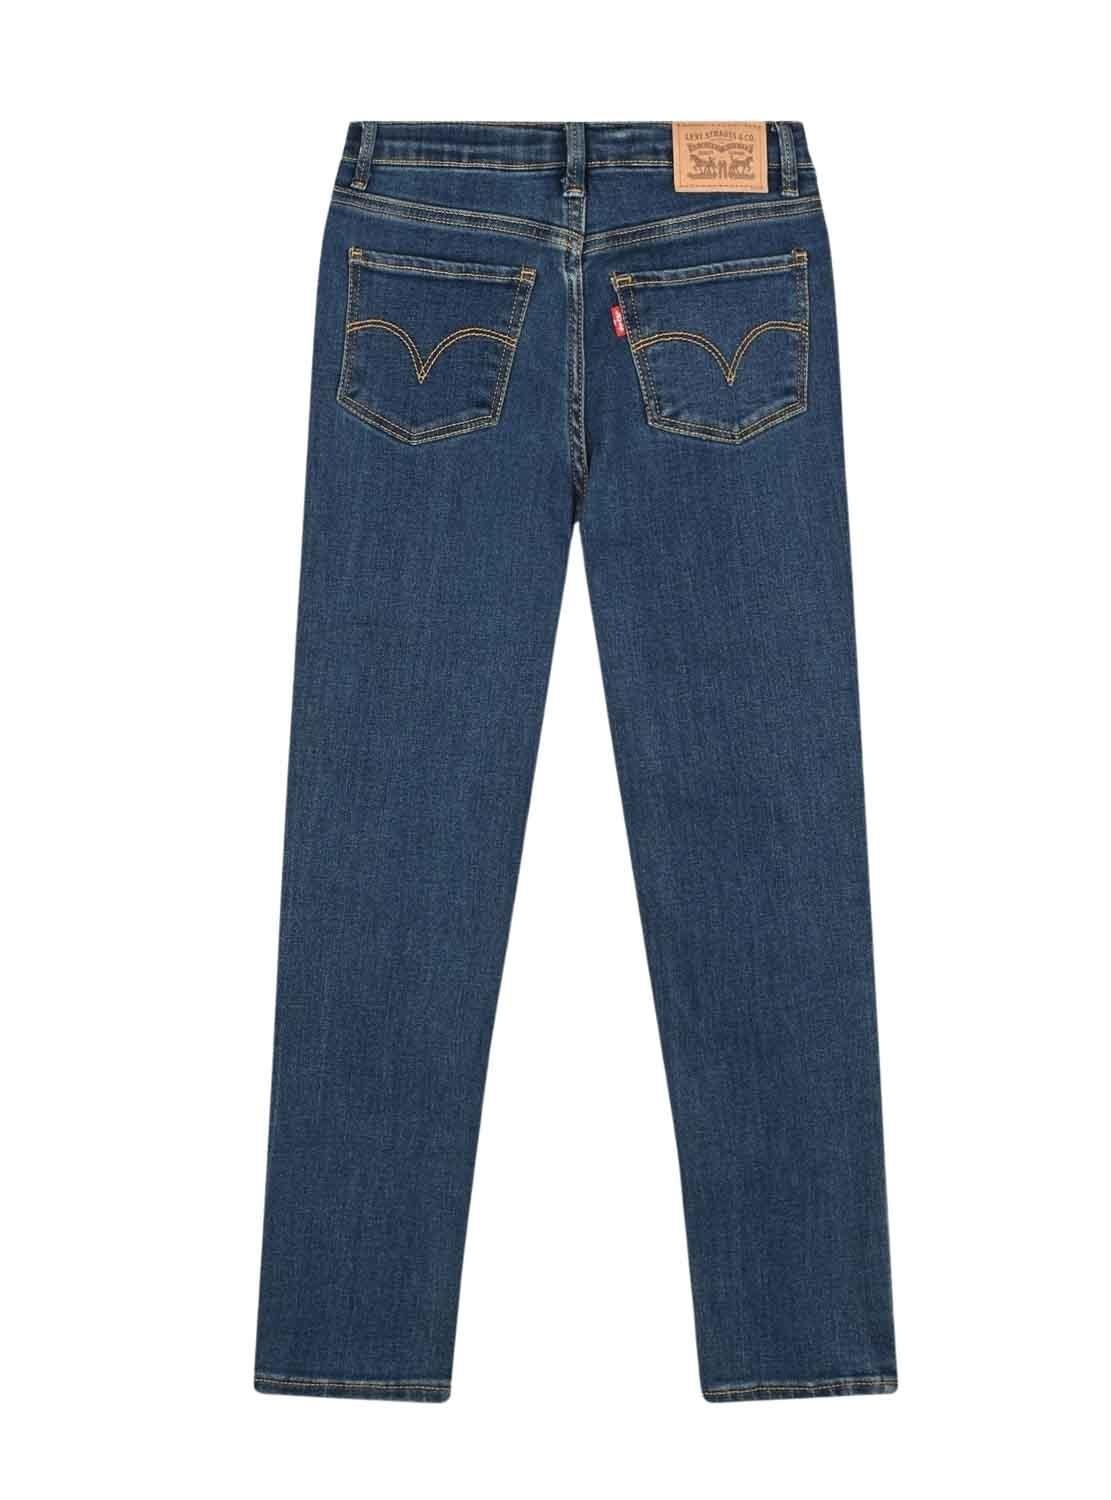 Pantaloni Jeans Levis 710 Eccellente Skinny Denim Bambina